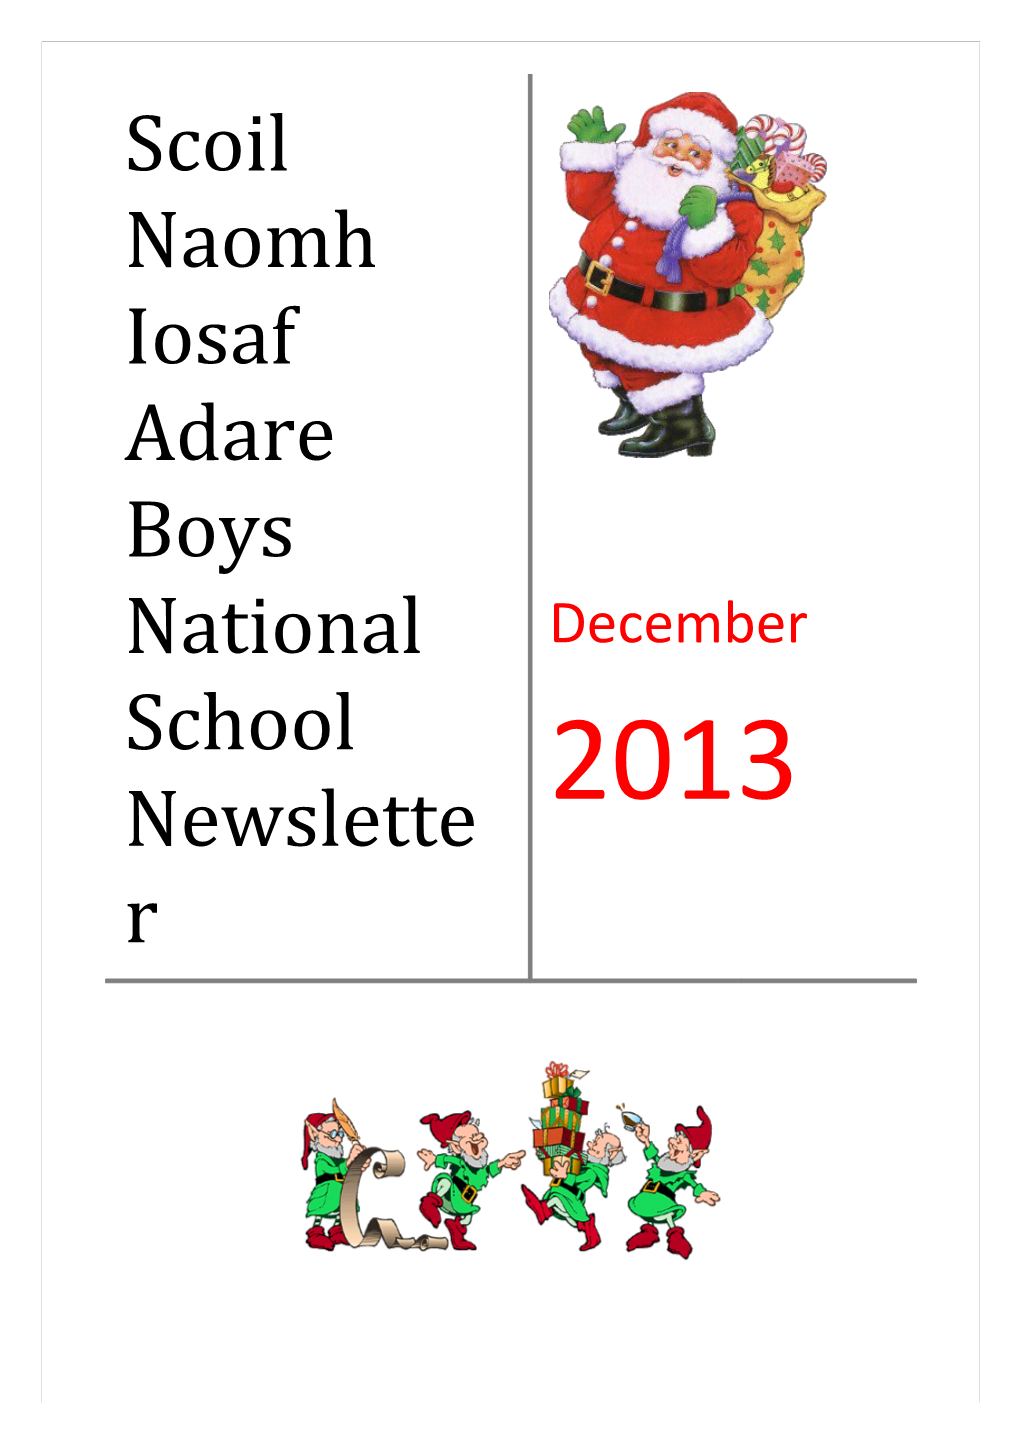 Scoil Naomh Iosaf Adare Boys National School Newsletter